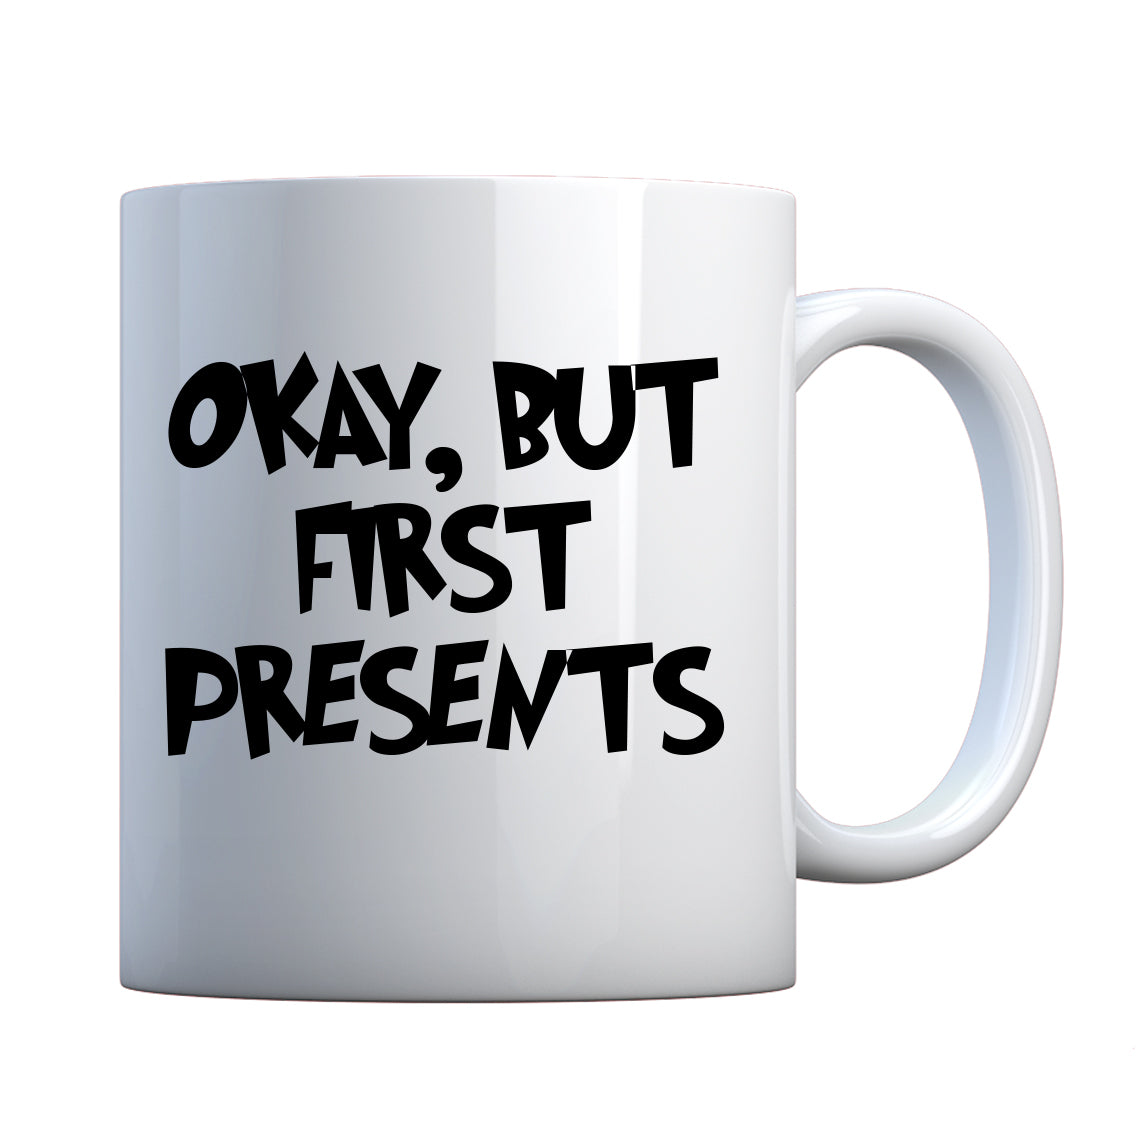 Okay but first, presents. Ceramic Gift Mug